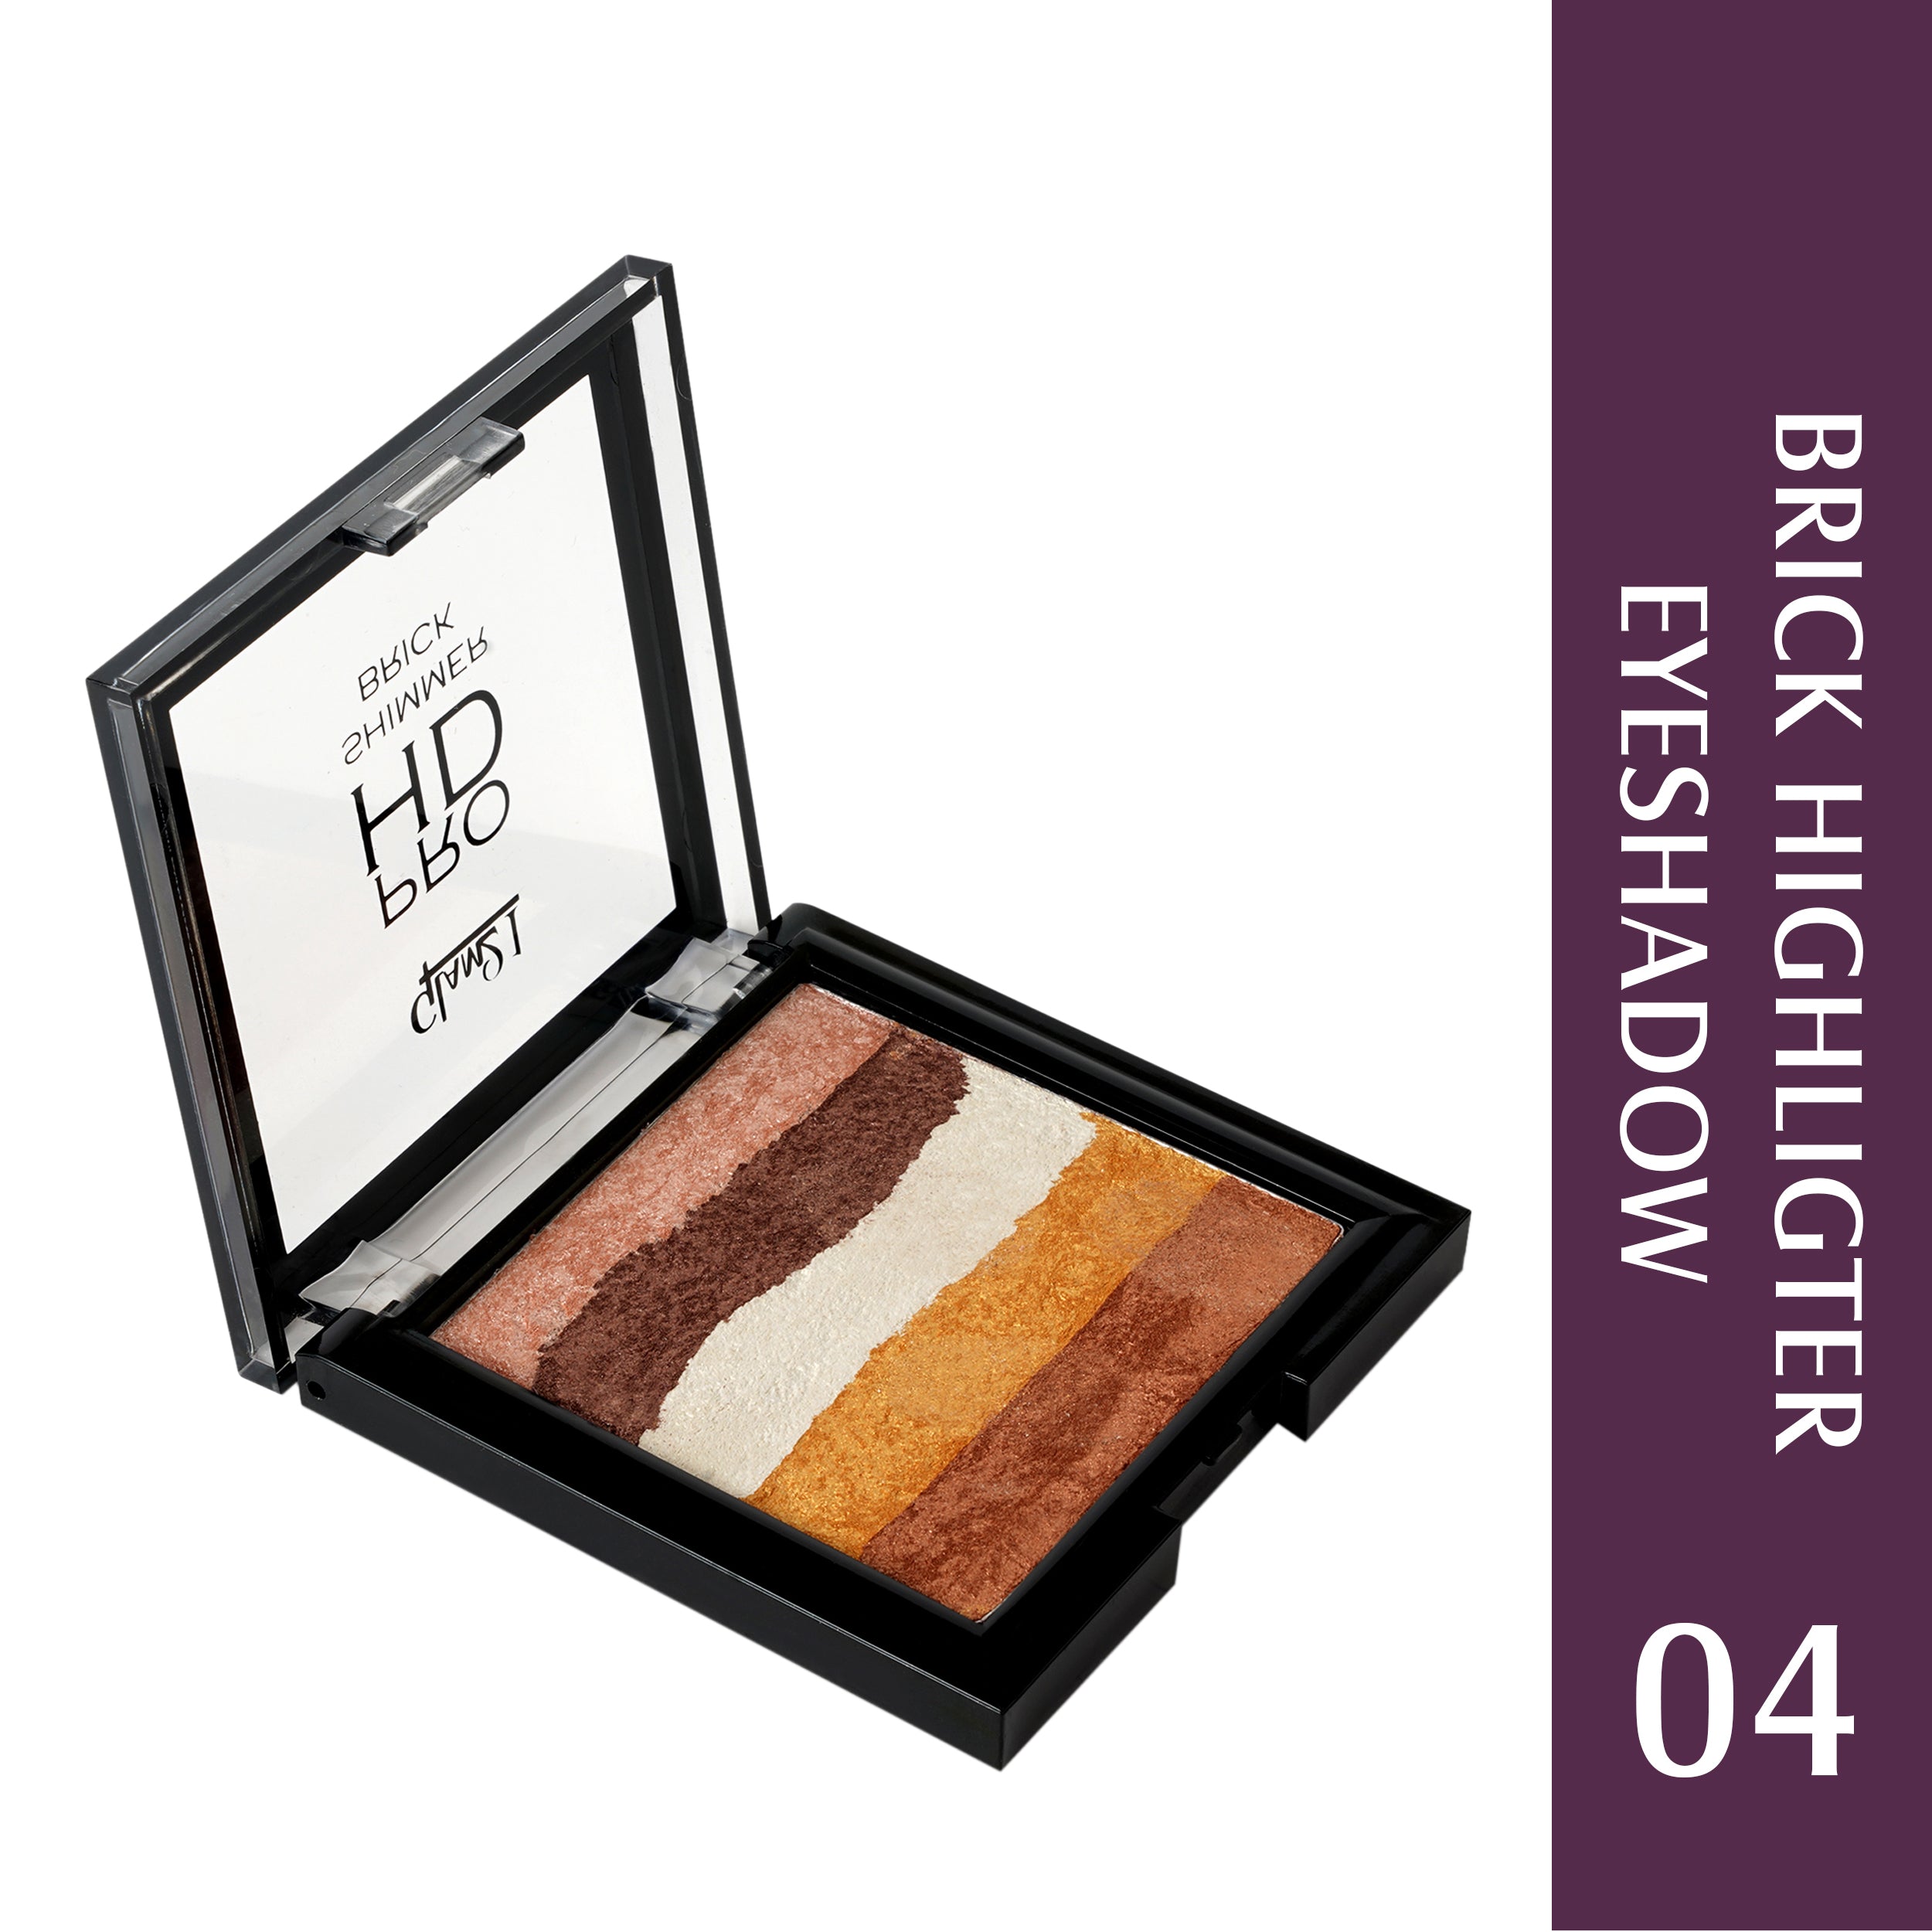 Glam21 Brick Eyeshadow Palette Long-Lasting| Shimmery Finish 5 Highly Pigmented Shades 7.5 g (Shade-04)